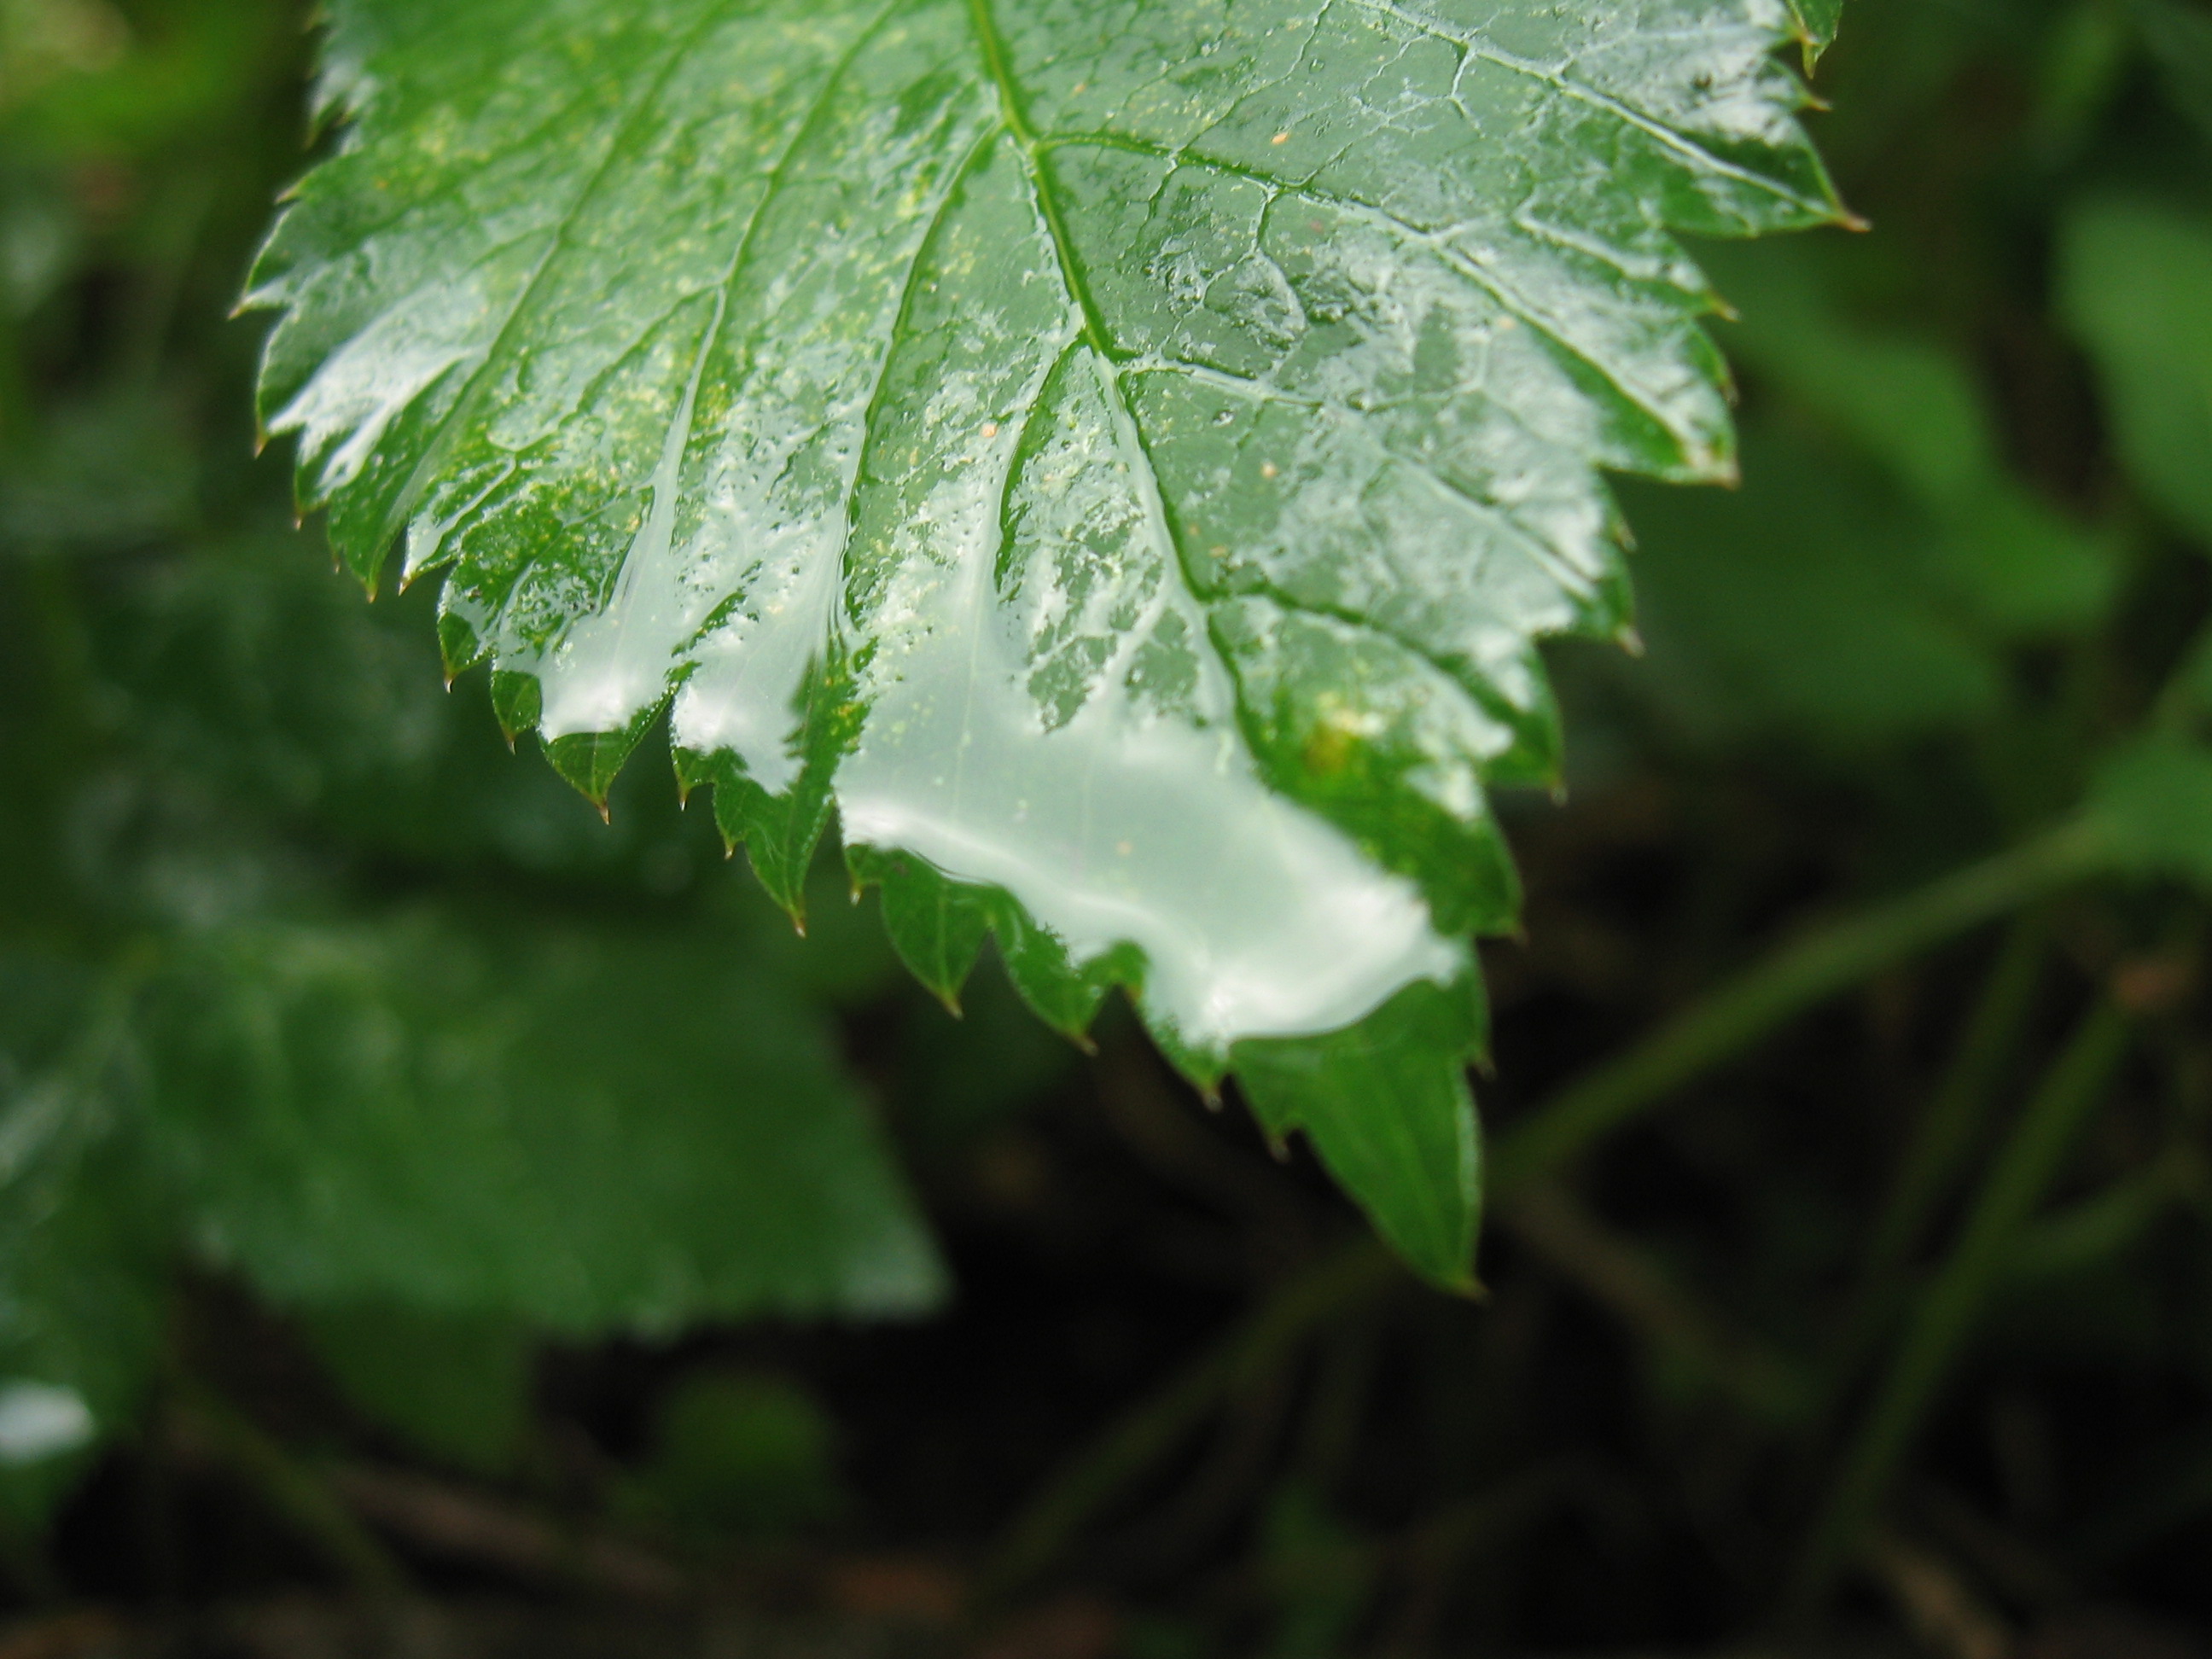 File:Wet leaf.jpg - Wikimedia Commons